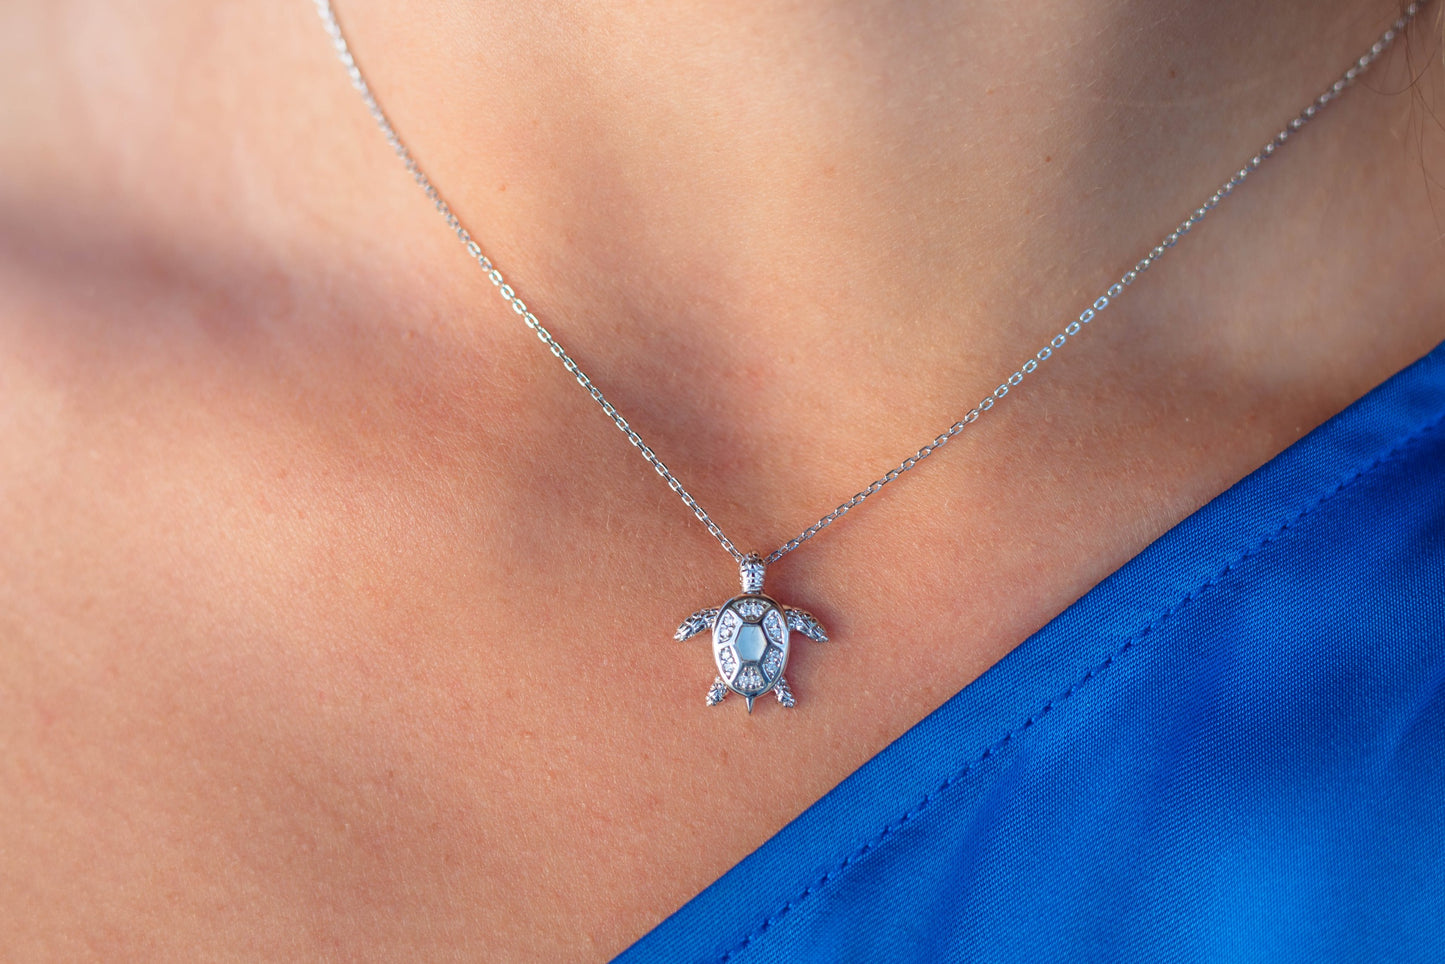 Georgini Sterling Silver Sea Turtle Pendant Necklace